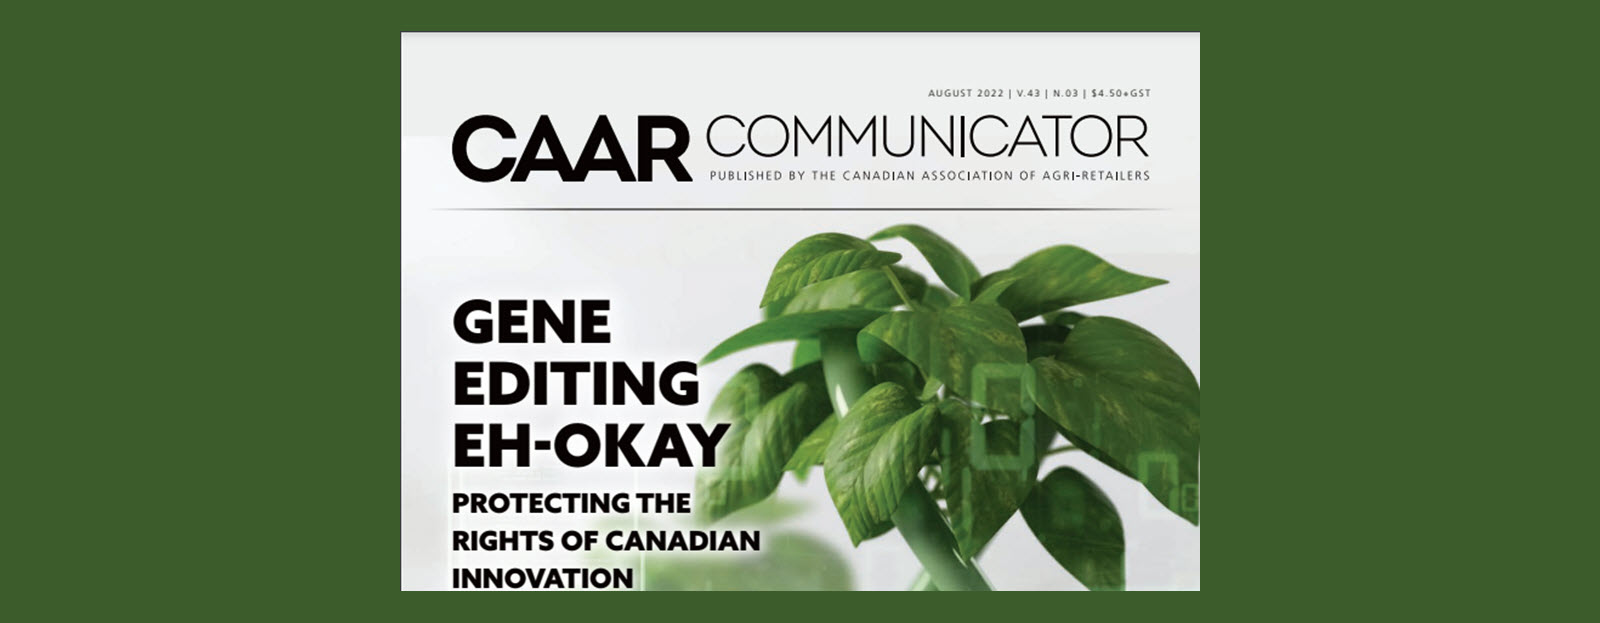 Banner for CAAR Communicator August 2022 issue